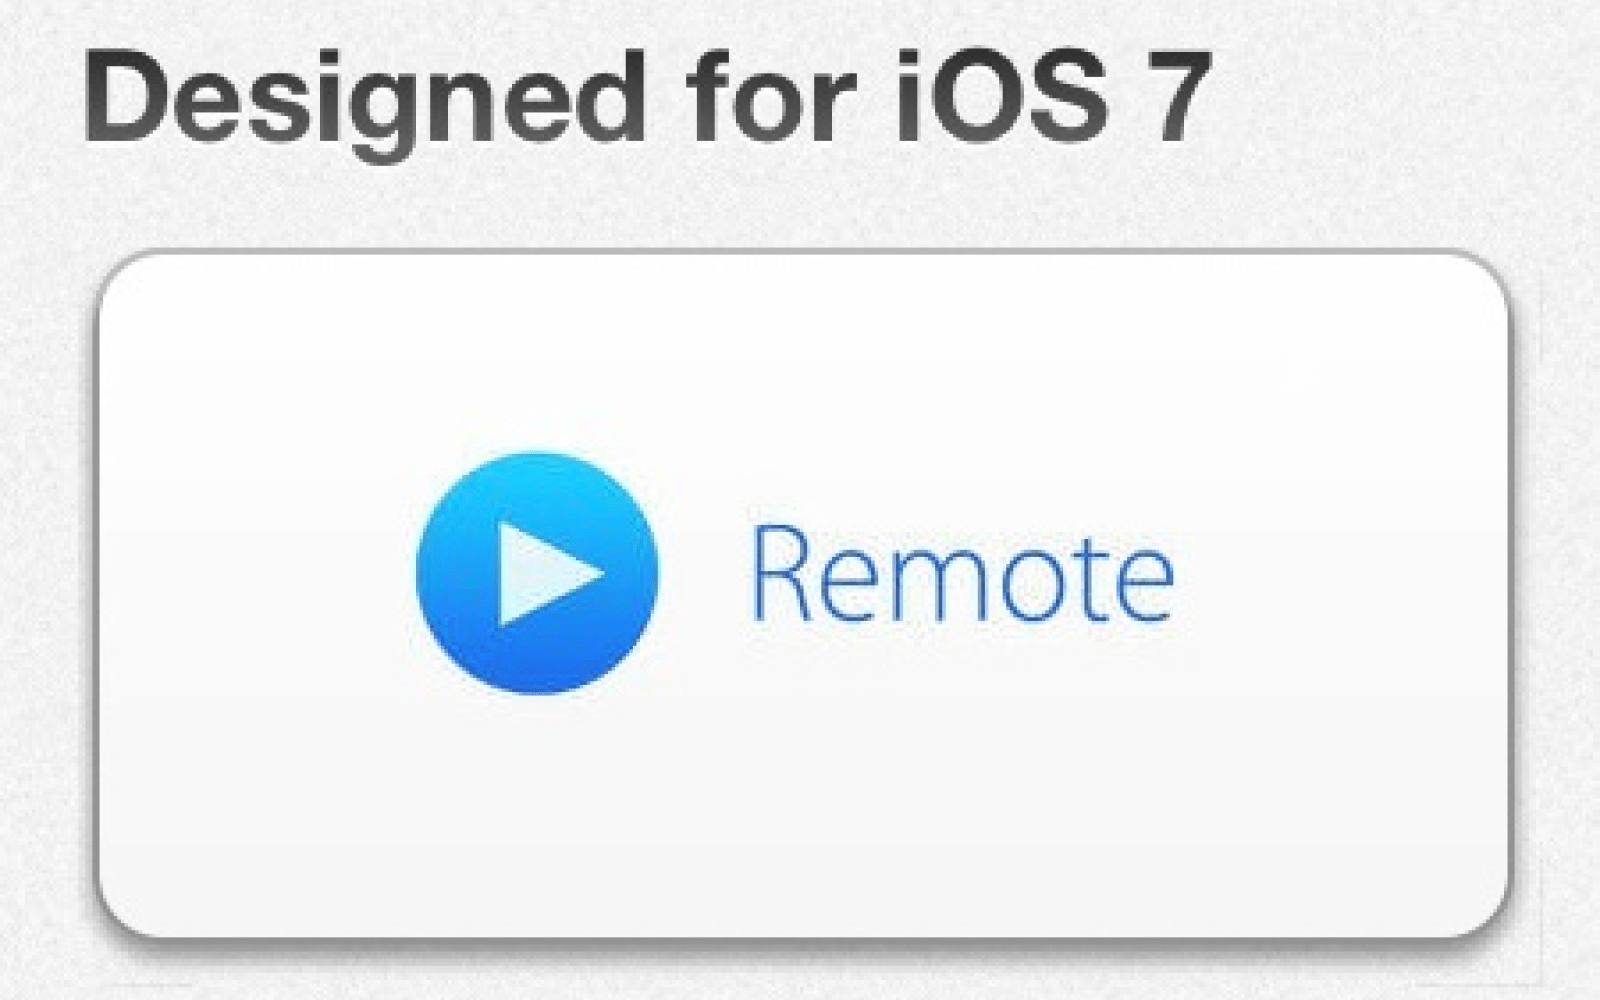 RemoteApp Logo - App Store banner corroborates impending iOS 7 update for Apple's ...